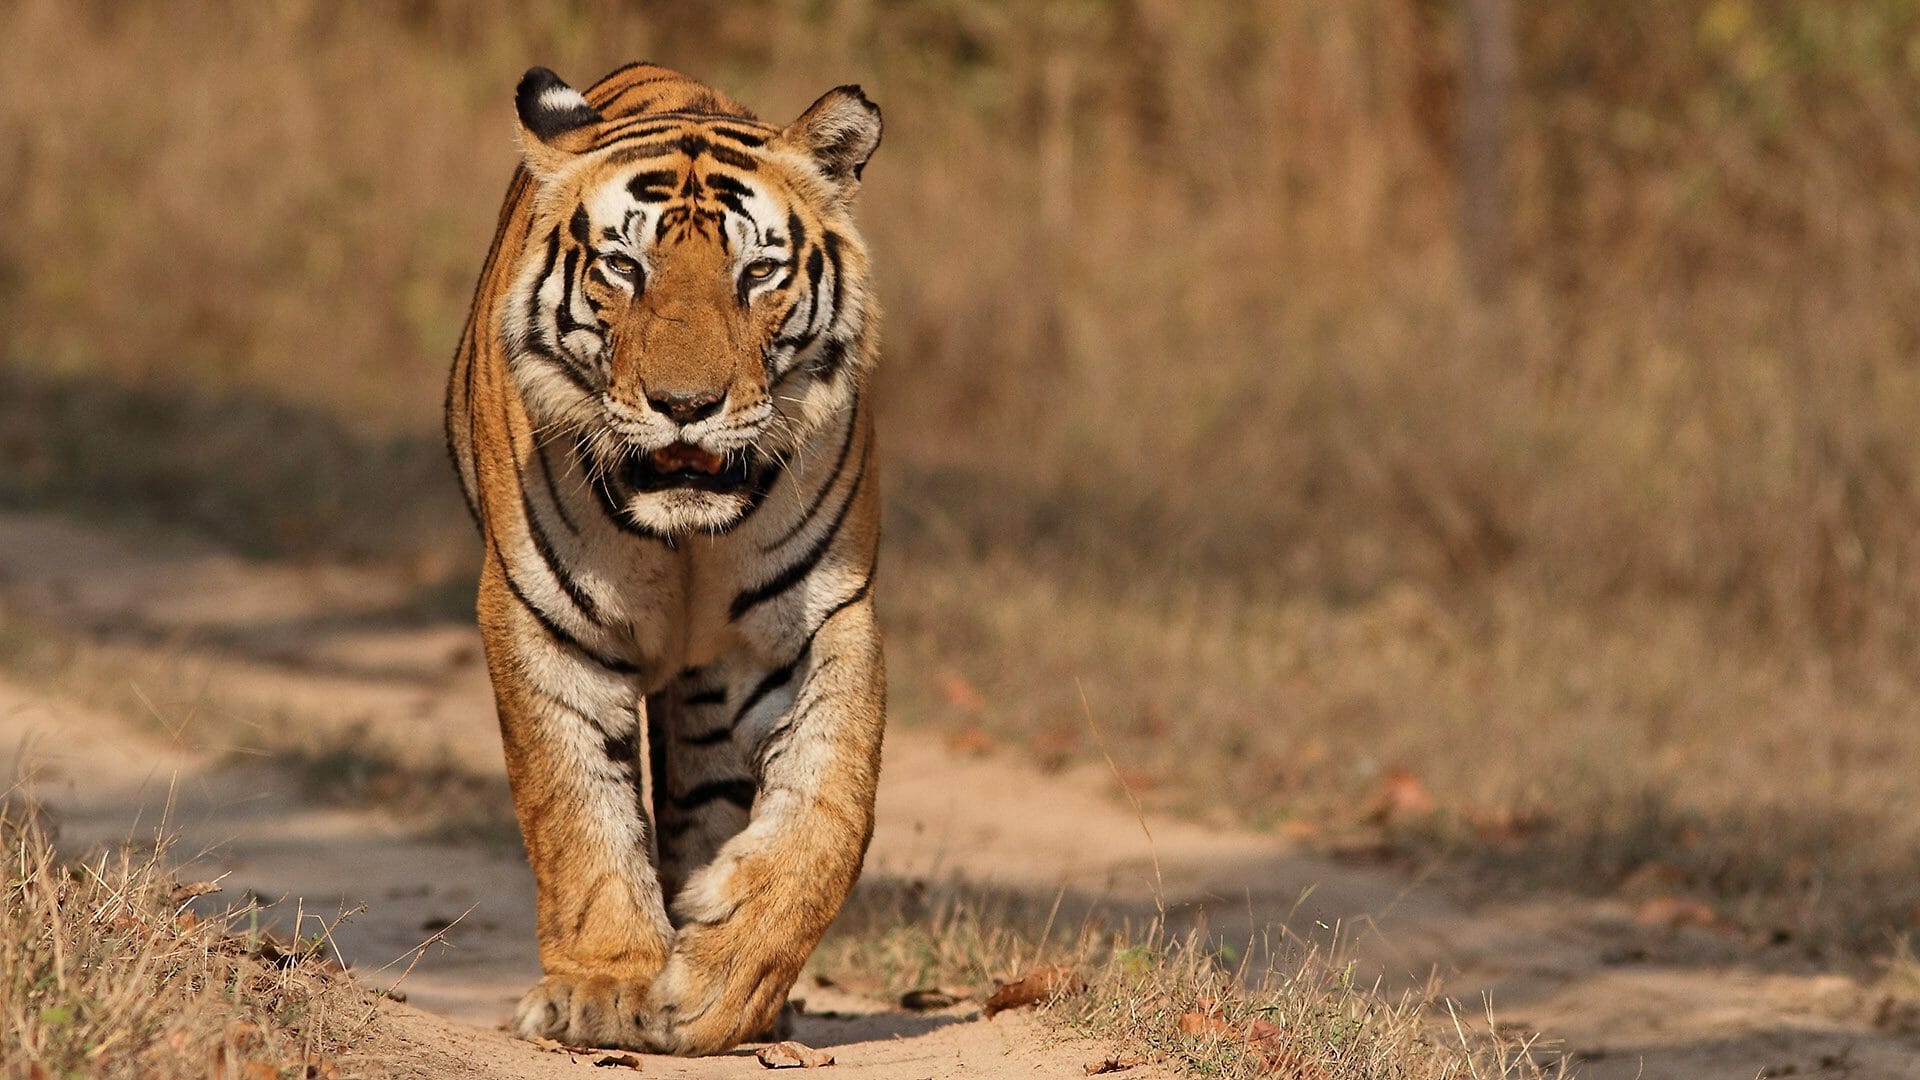 Tiger Facts, Types, Classification, Habitat, Diet, Adaptations